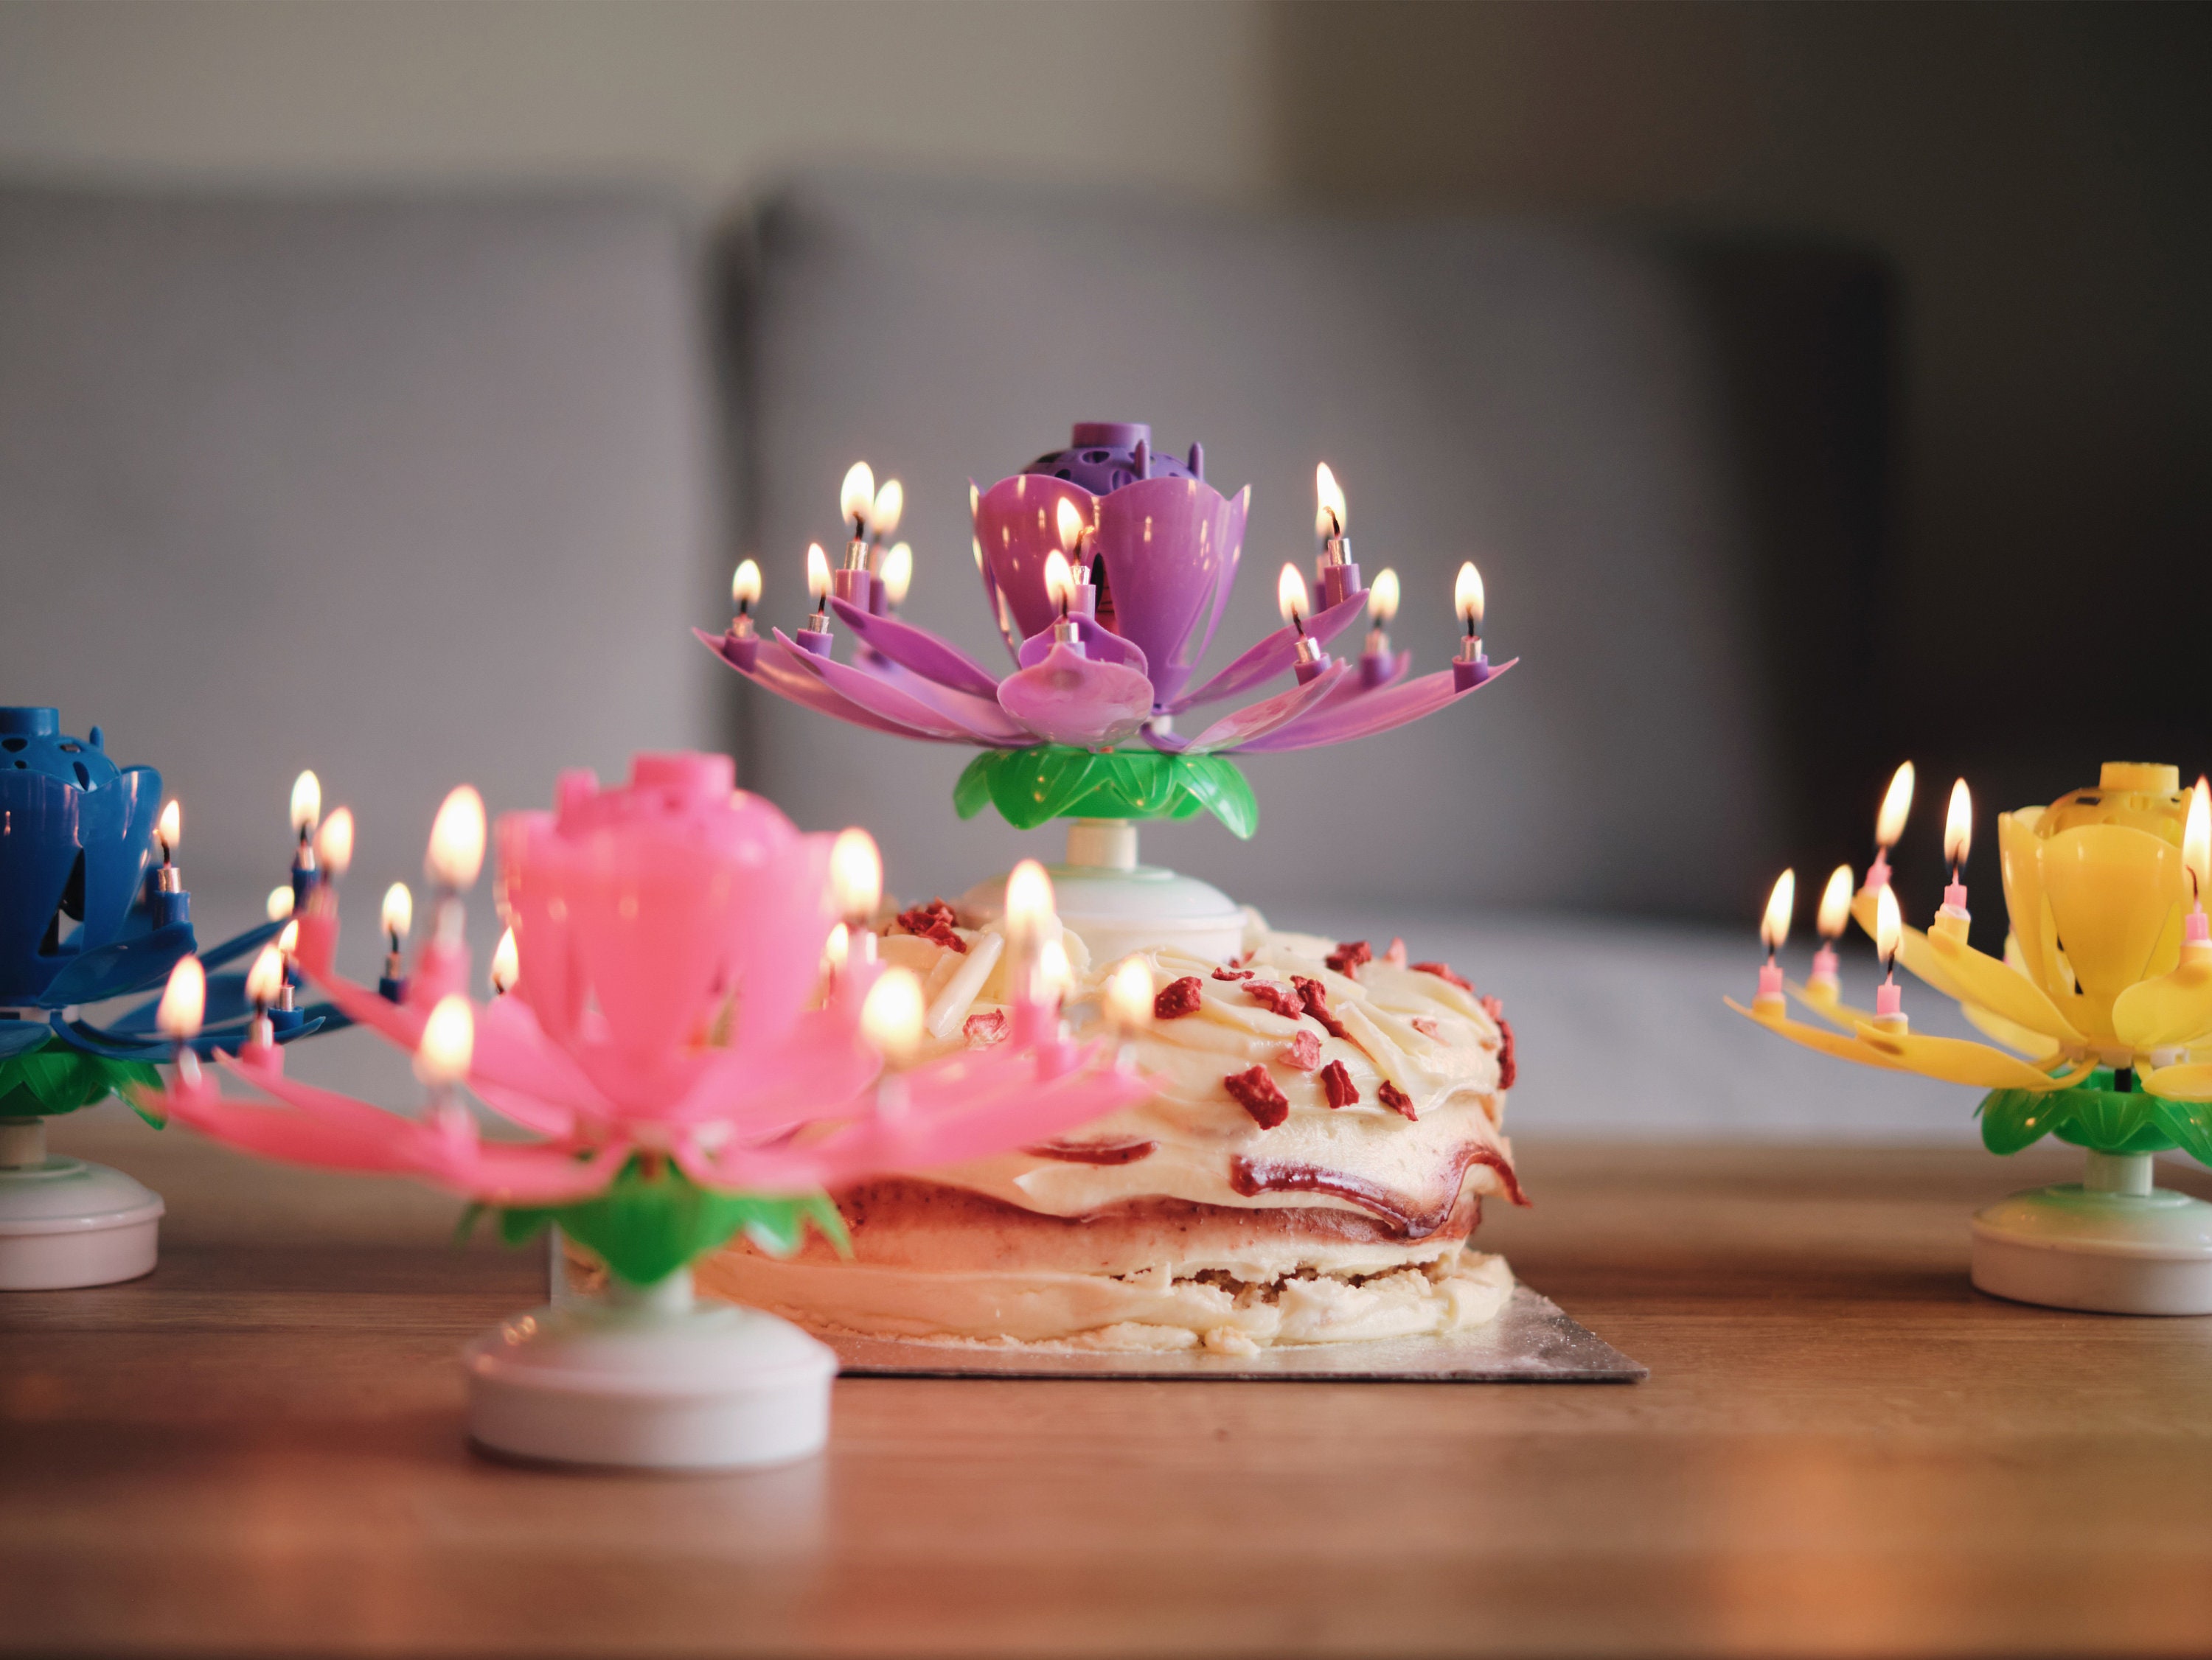 Nylea Birthday Cake Flower Candles with Happy Birthday Music Rotating Setup  - Pink